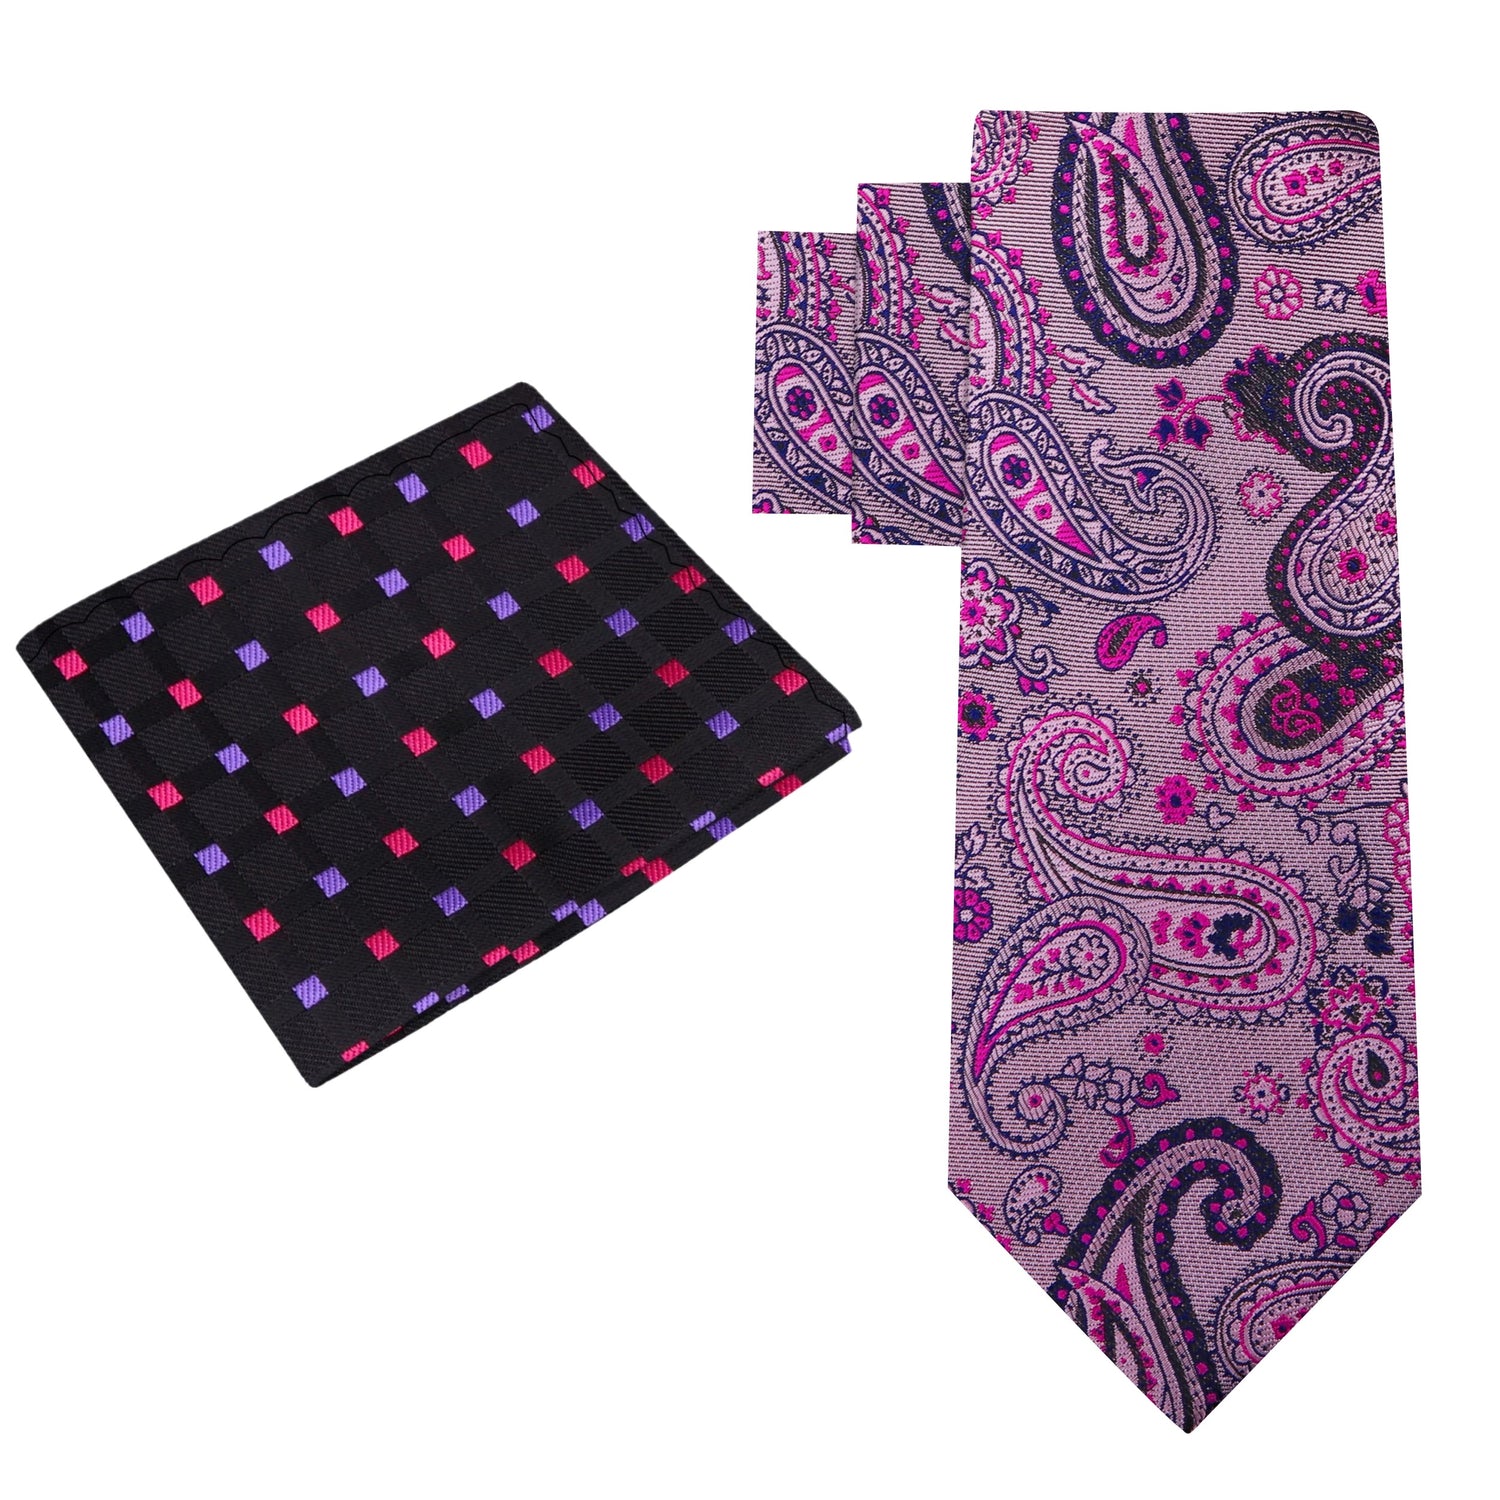 Alt View: Pink, Black Paisley Necktie with Black, Pink, Purple Check Square